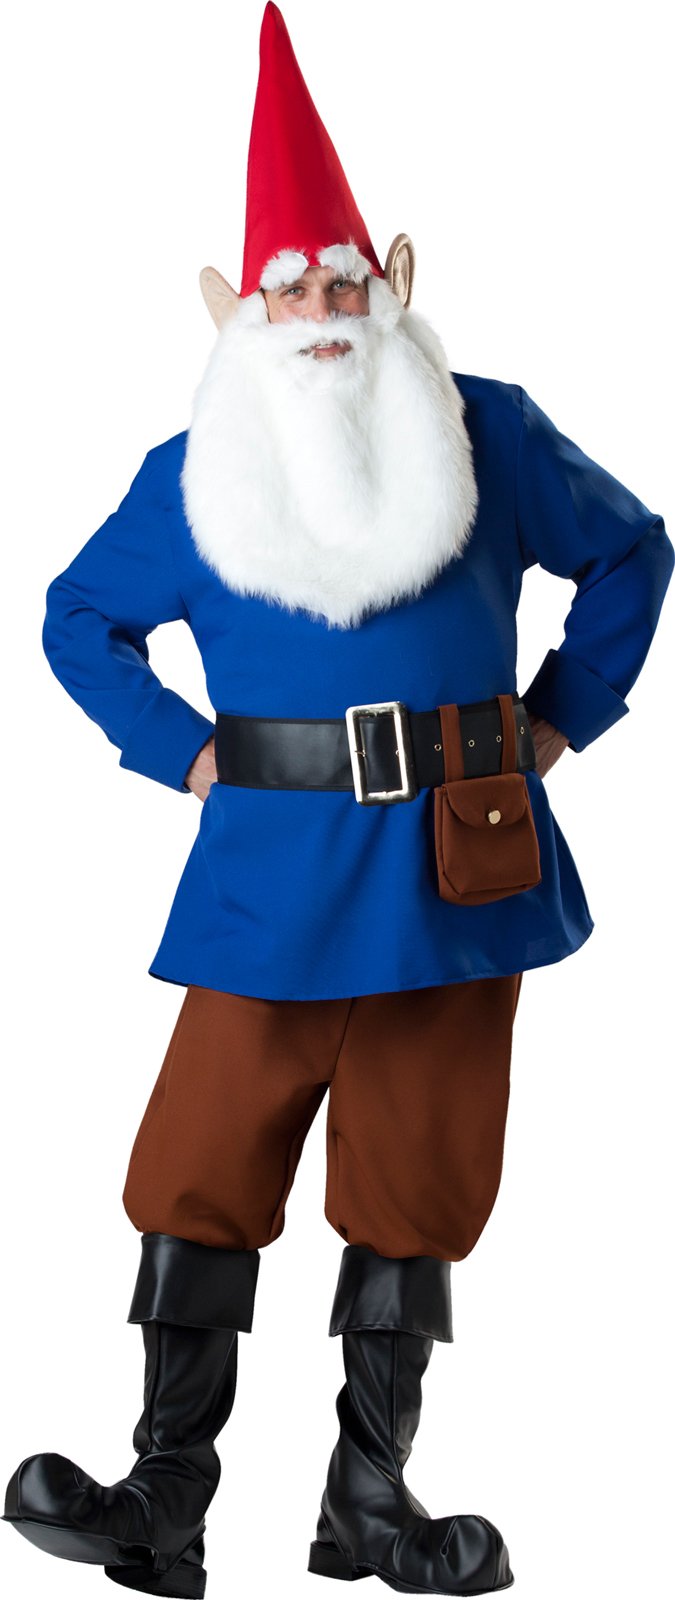 Mr. Garden Gnome Elite Collection Adult Costume